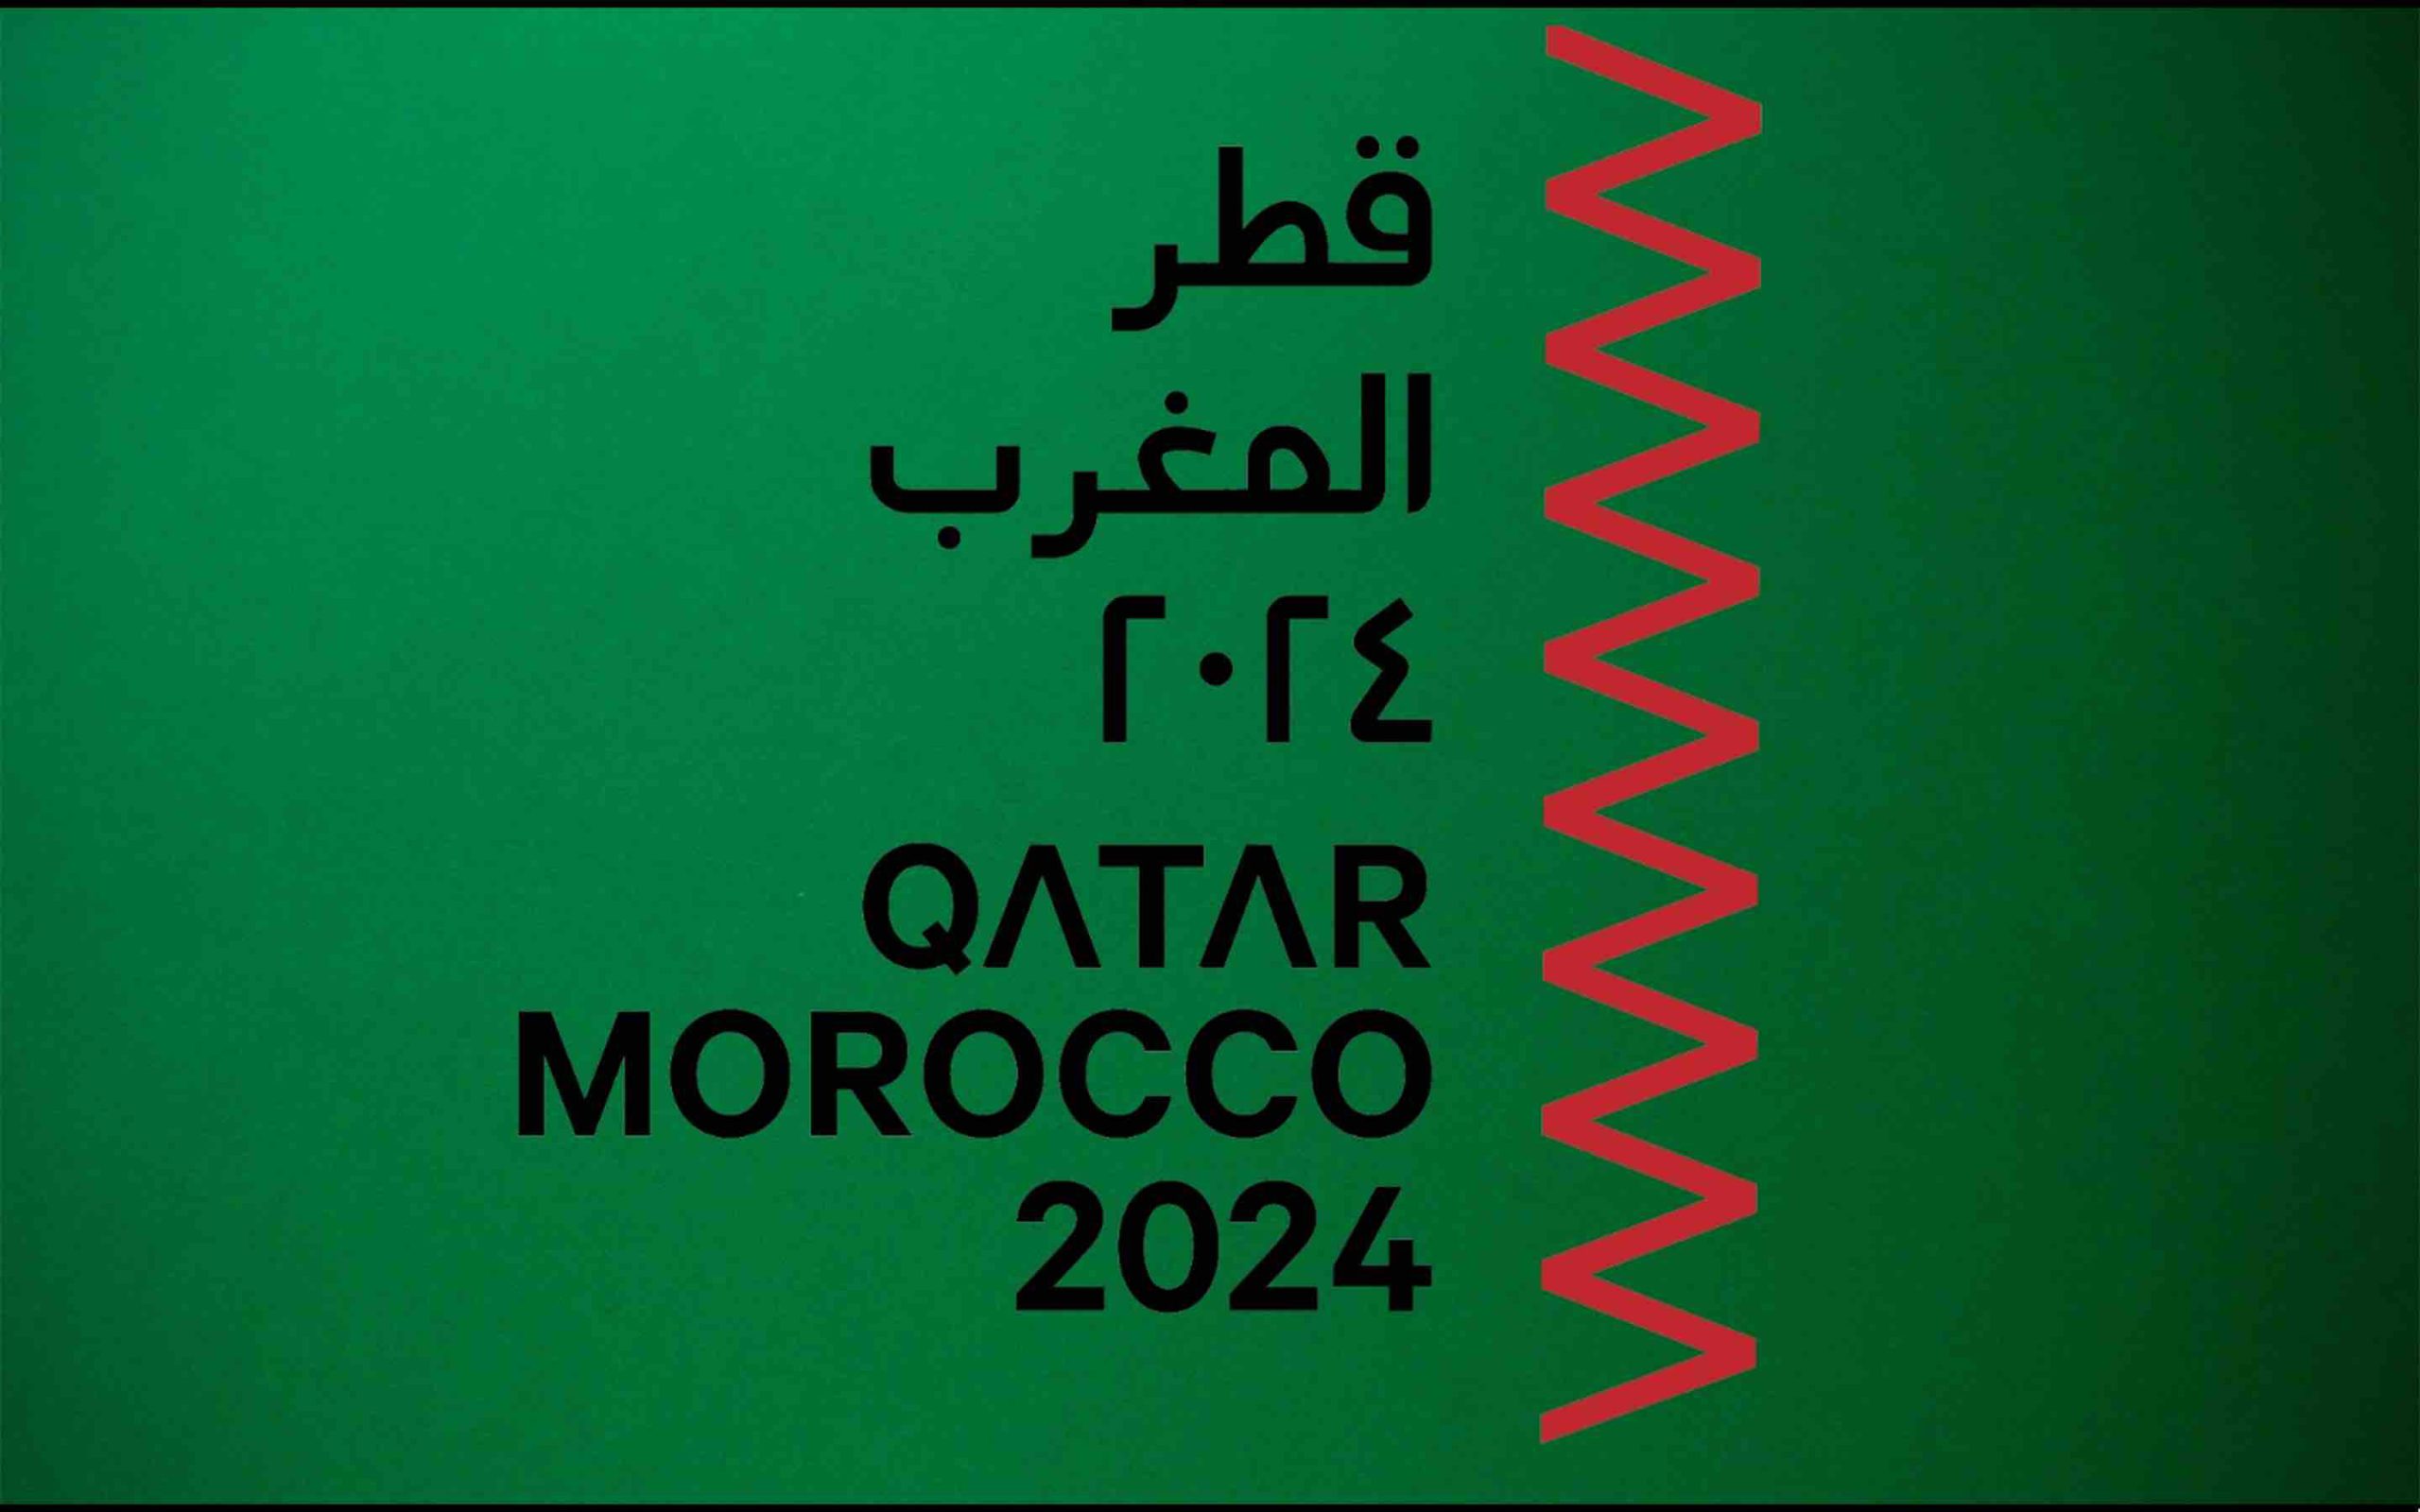 partenariat culturel Years of Culture Maroc Qatar Morocco 2024